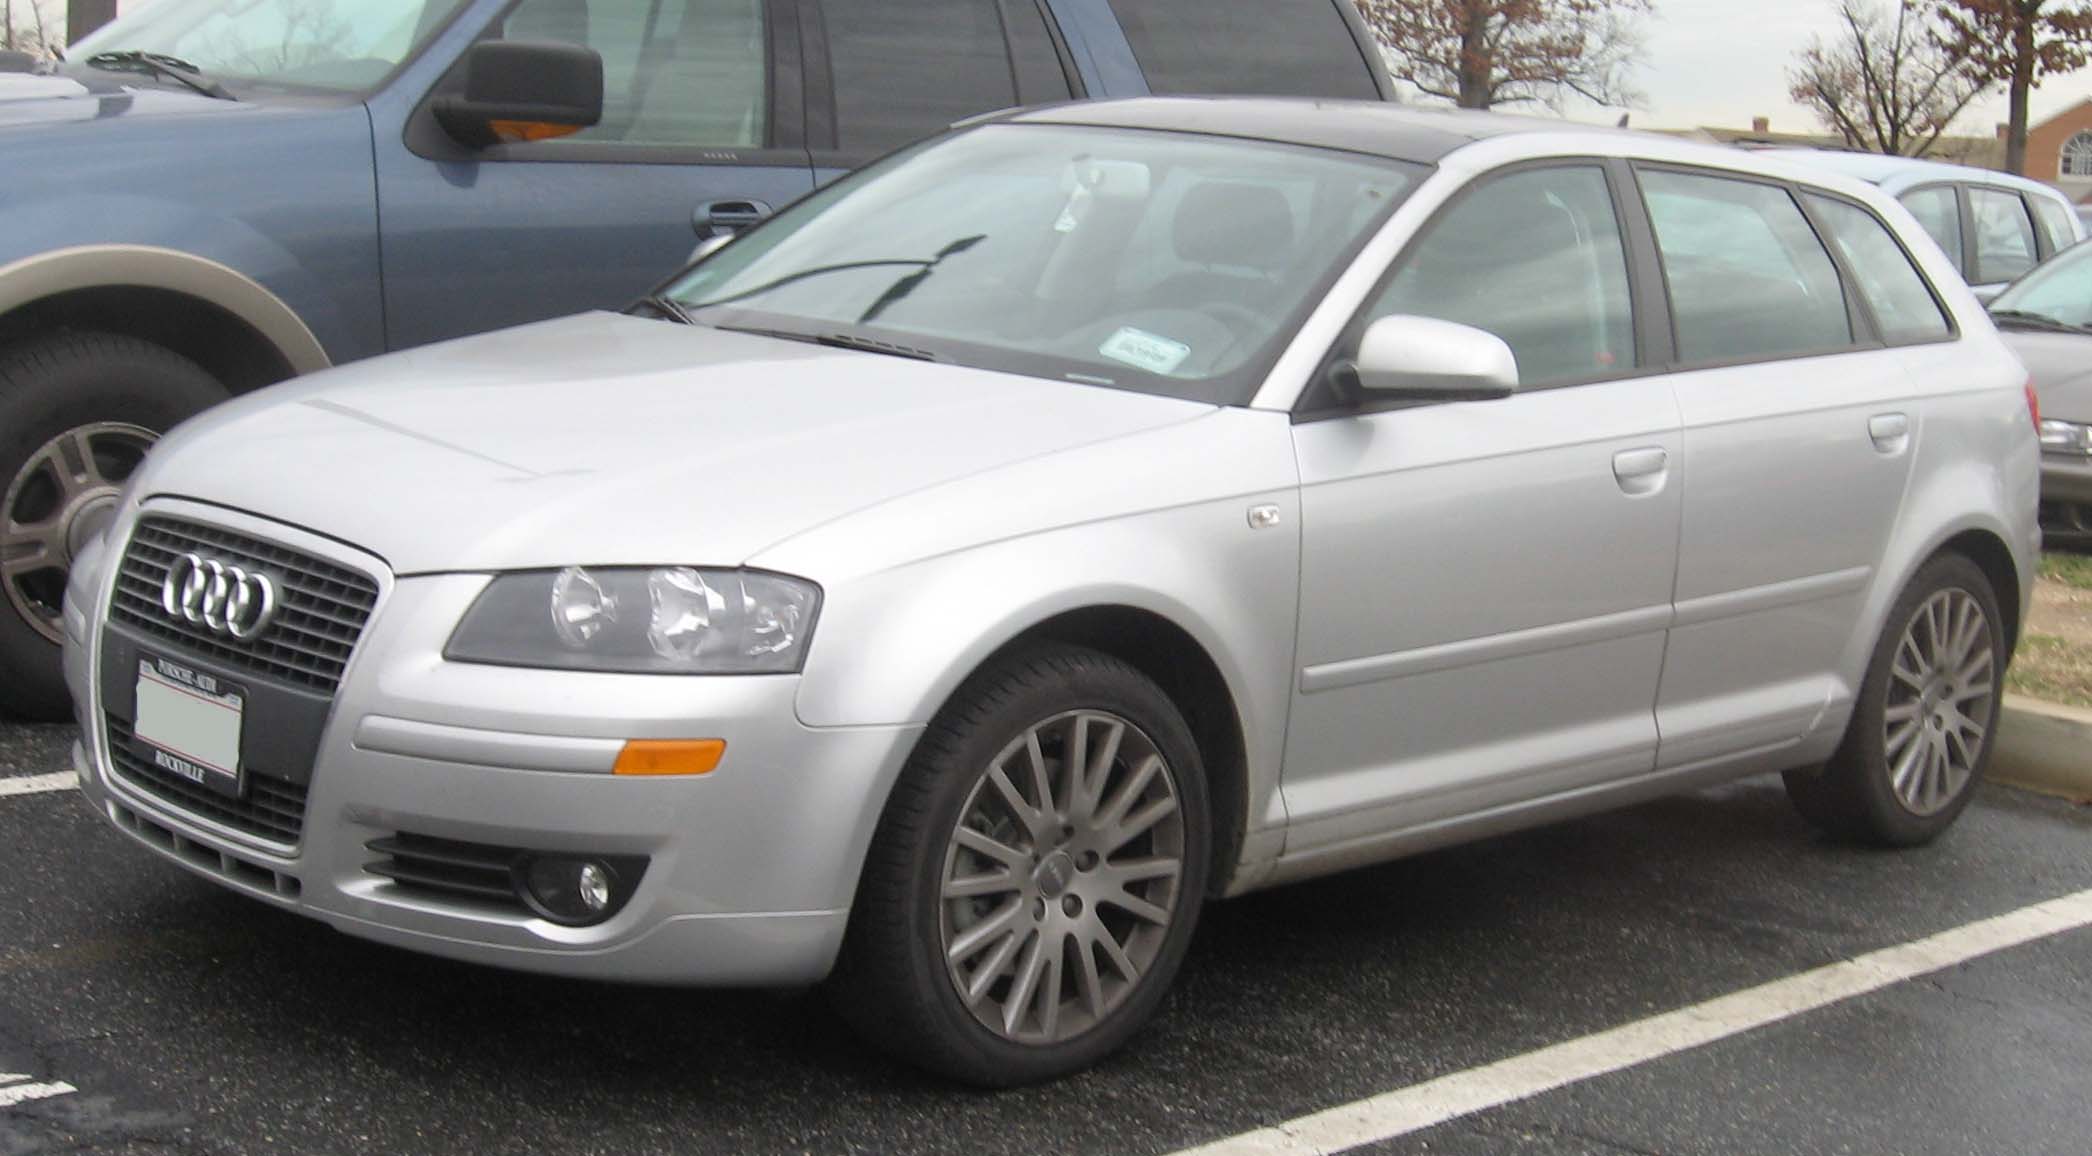 File:1997 Audi A3 (8L) 1.6 3-door hatchback (26381022314).jpg - Wikimedia  Commons